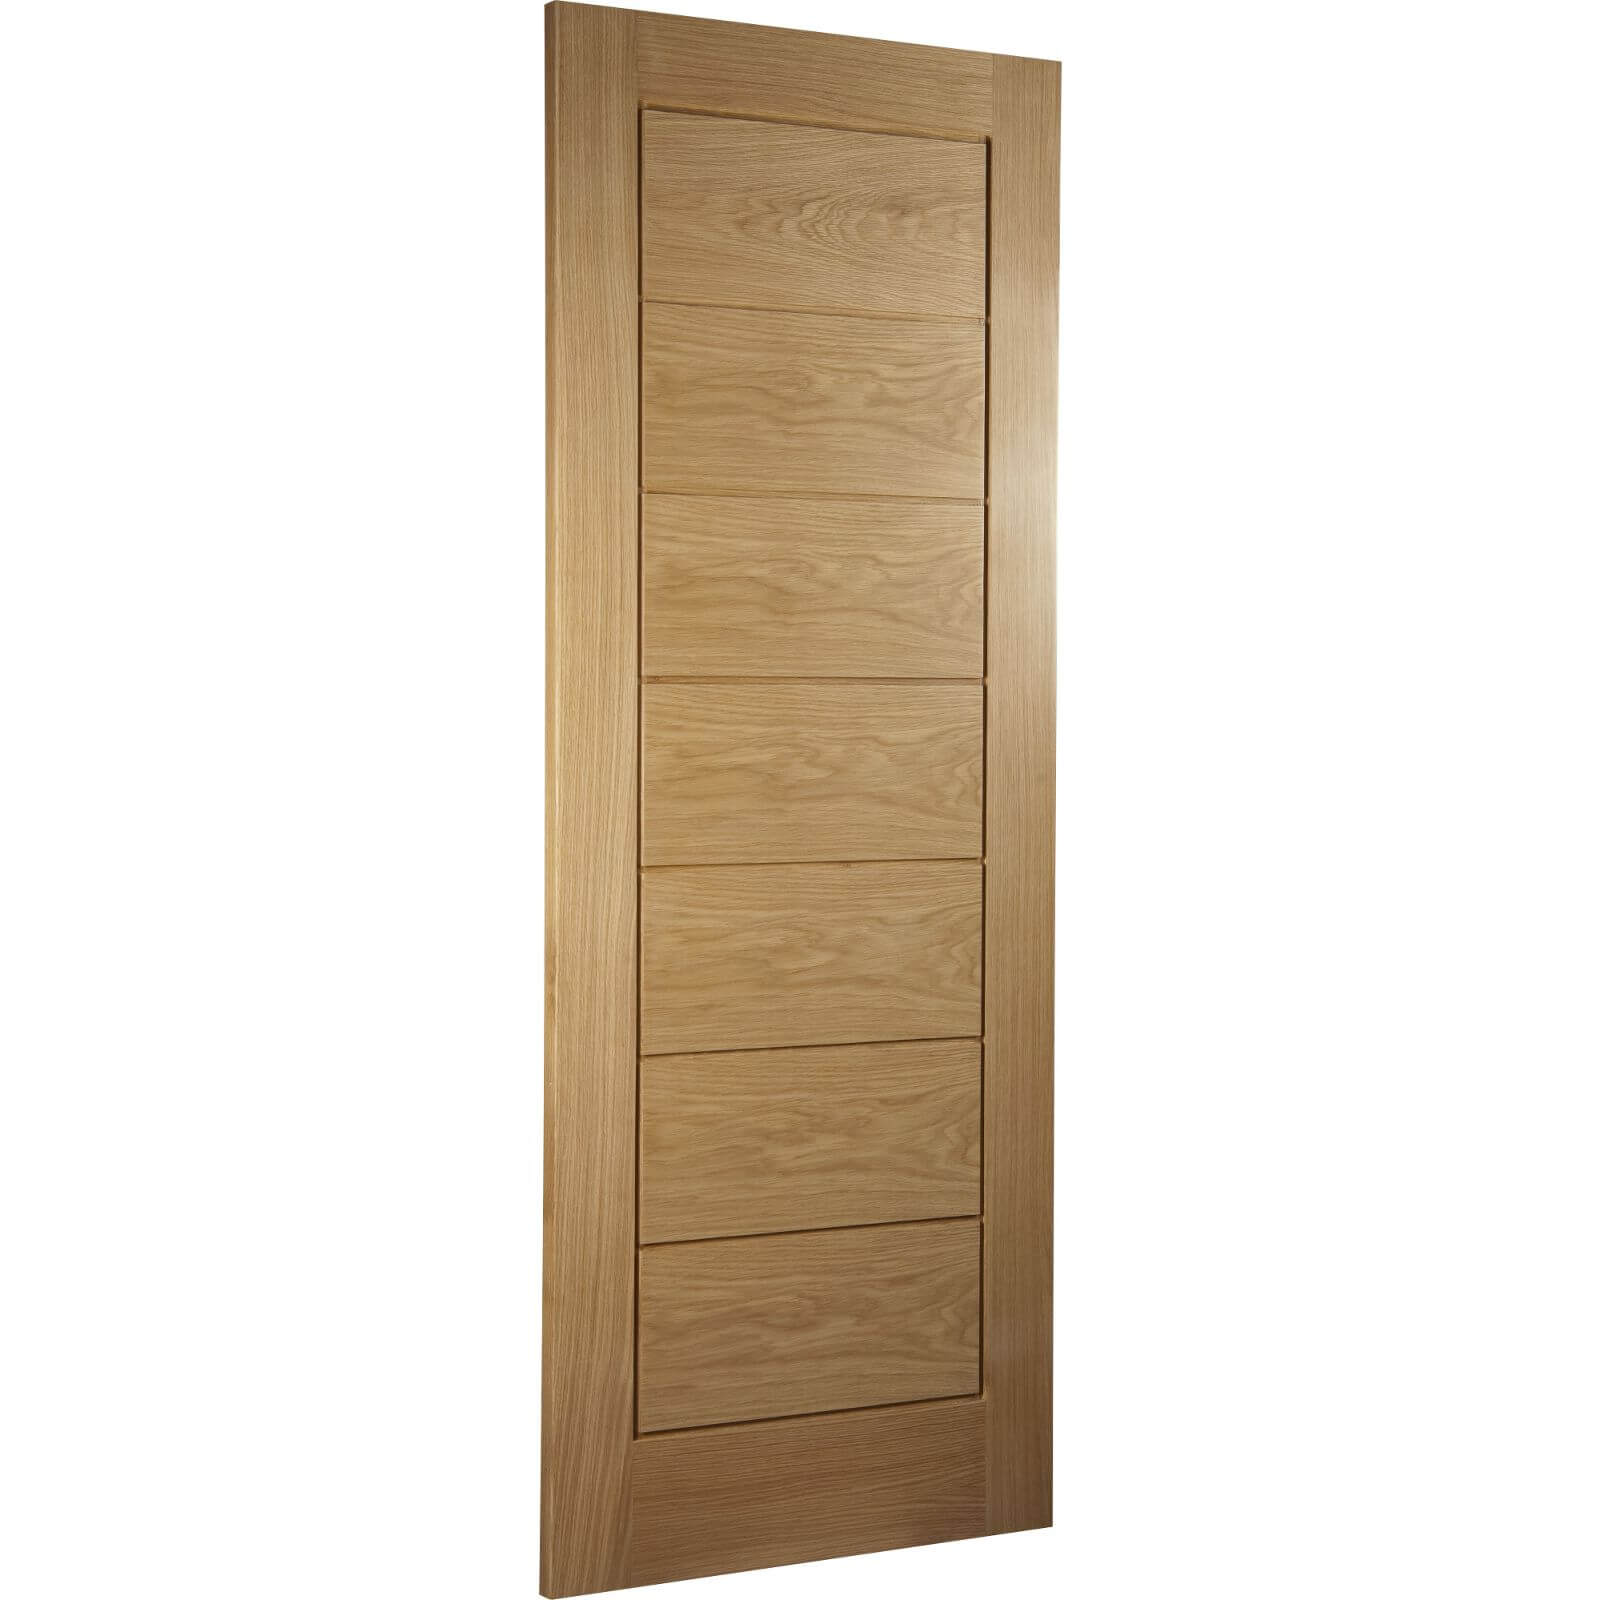 Horizontal White Oak Veneer Internal Door - 762mm Wide